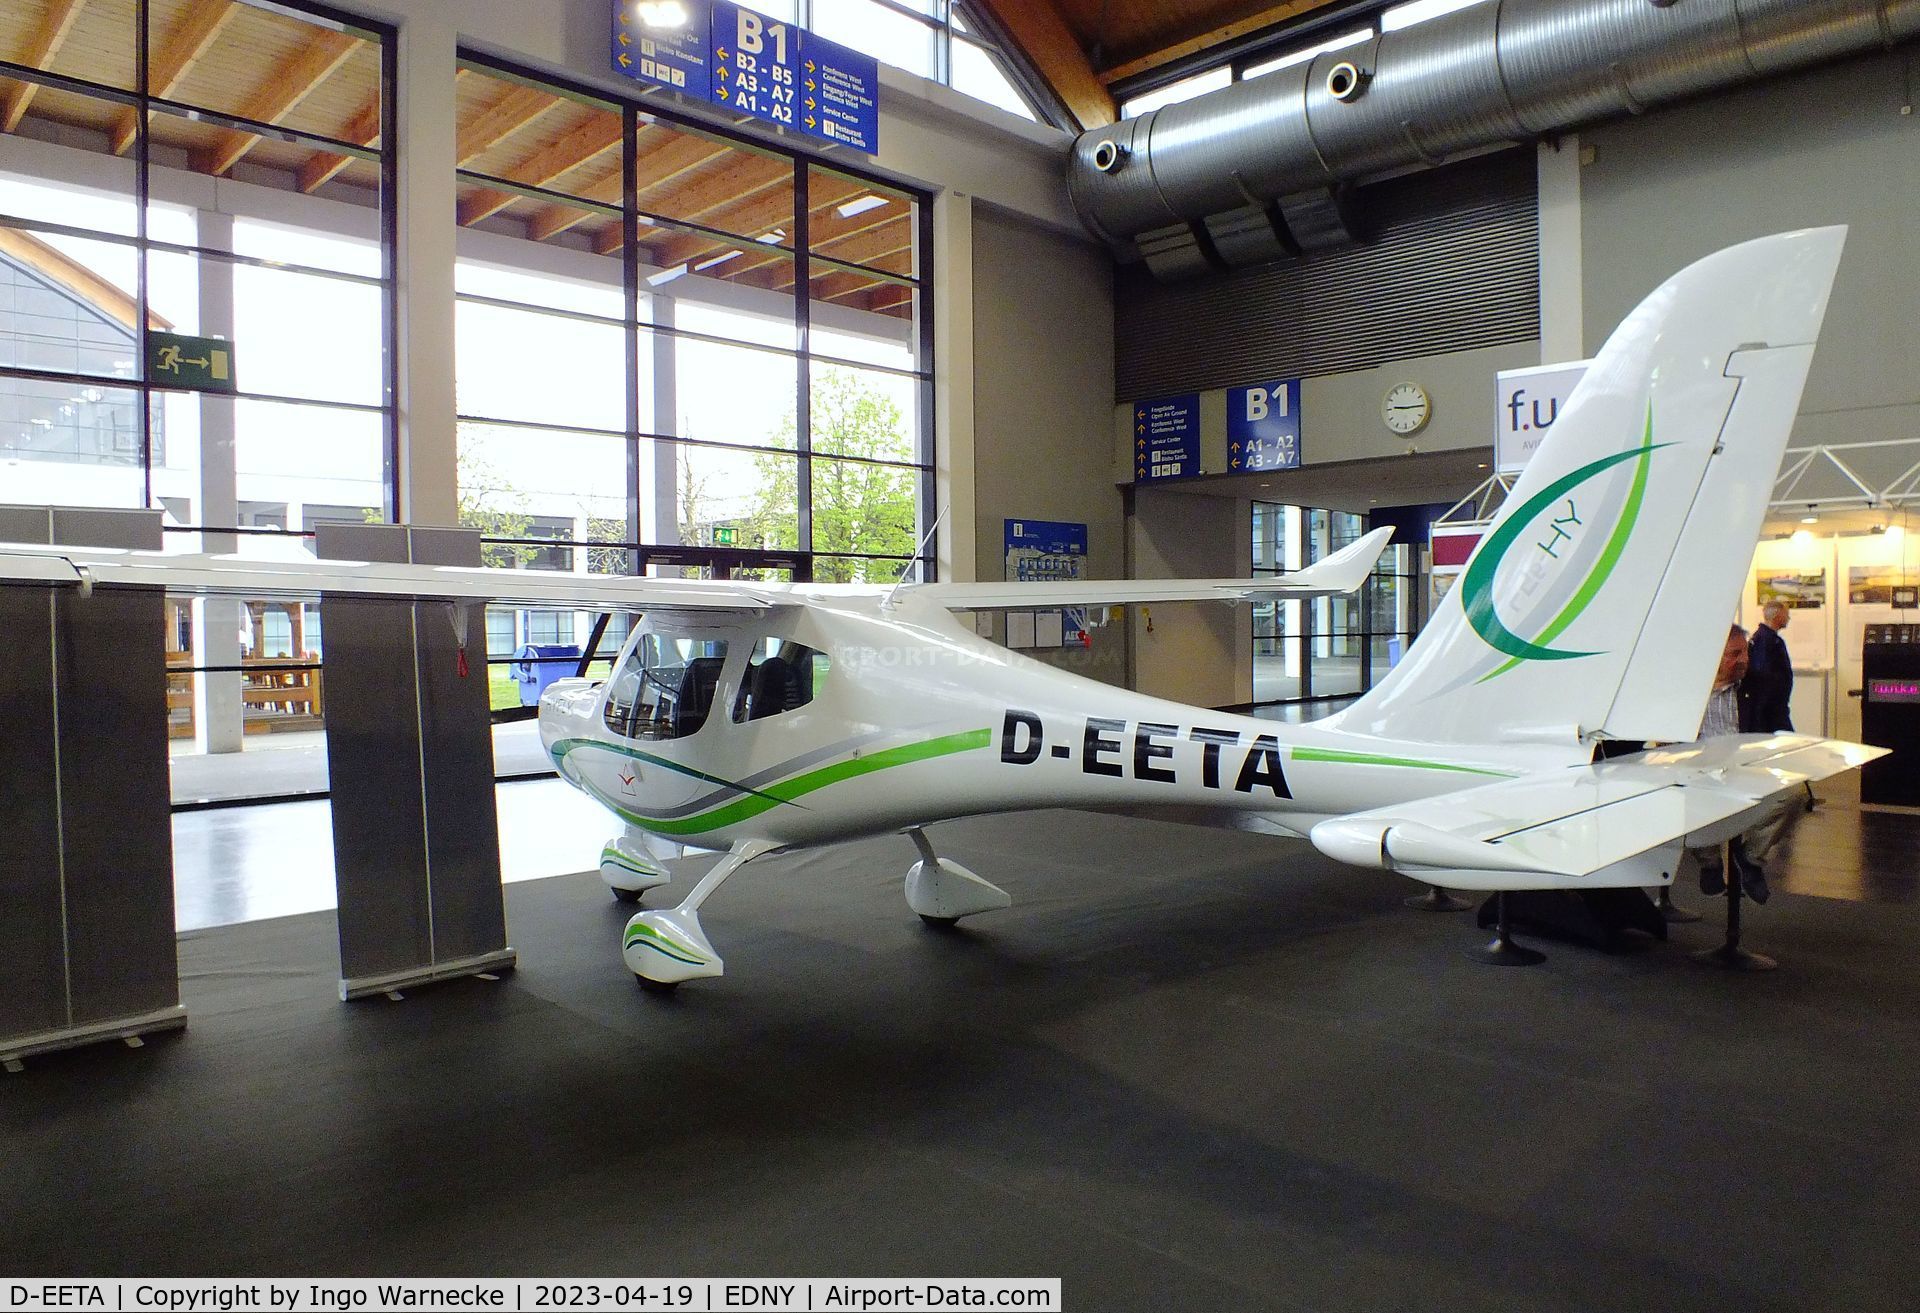 D-EETA, 2019 Flight Design F2e C/N Not found D-EETA, Flight Design F2e HY with electric motor hydrogen powered by HYFLY fuel cell at the AERO 2023, Friedrichshafen